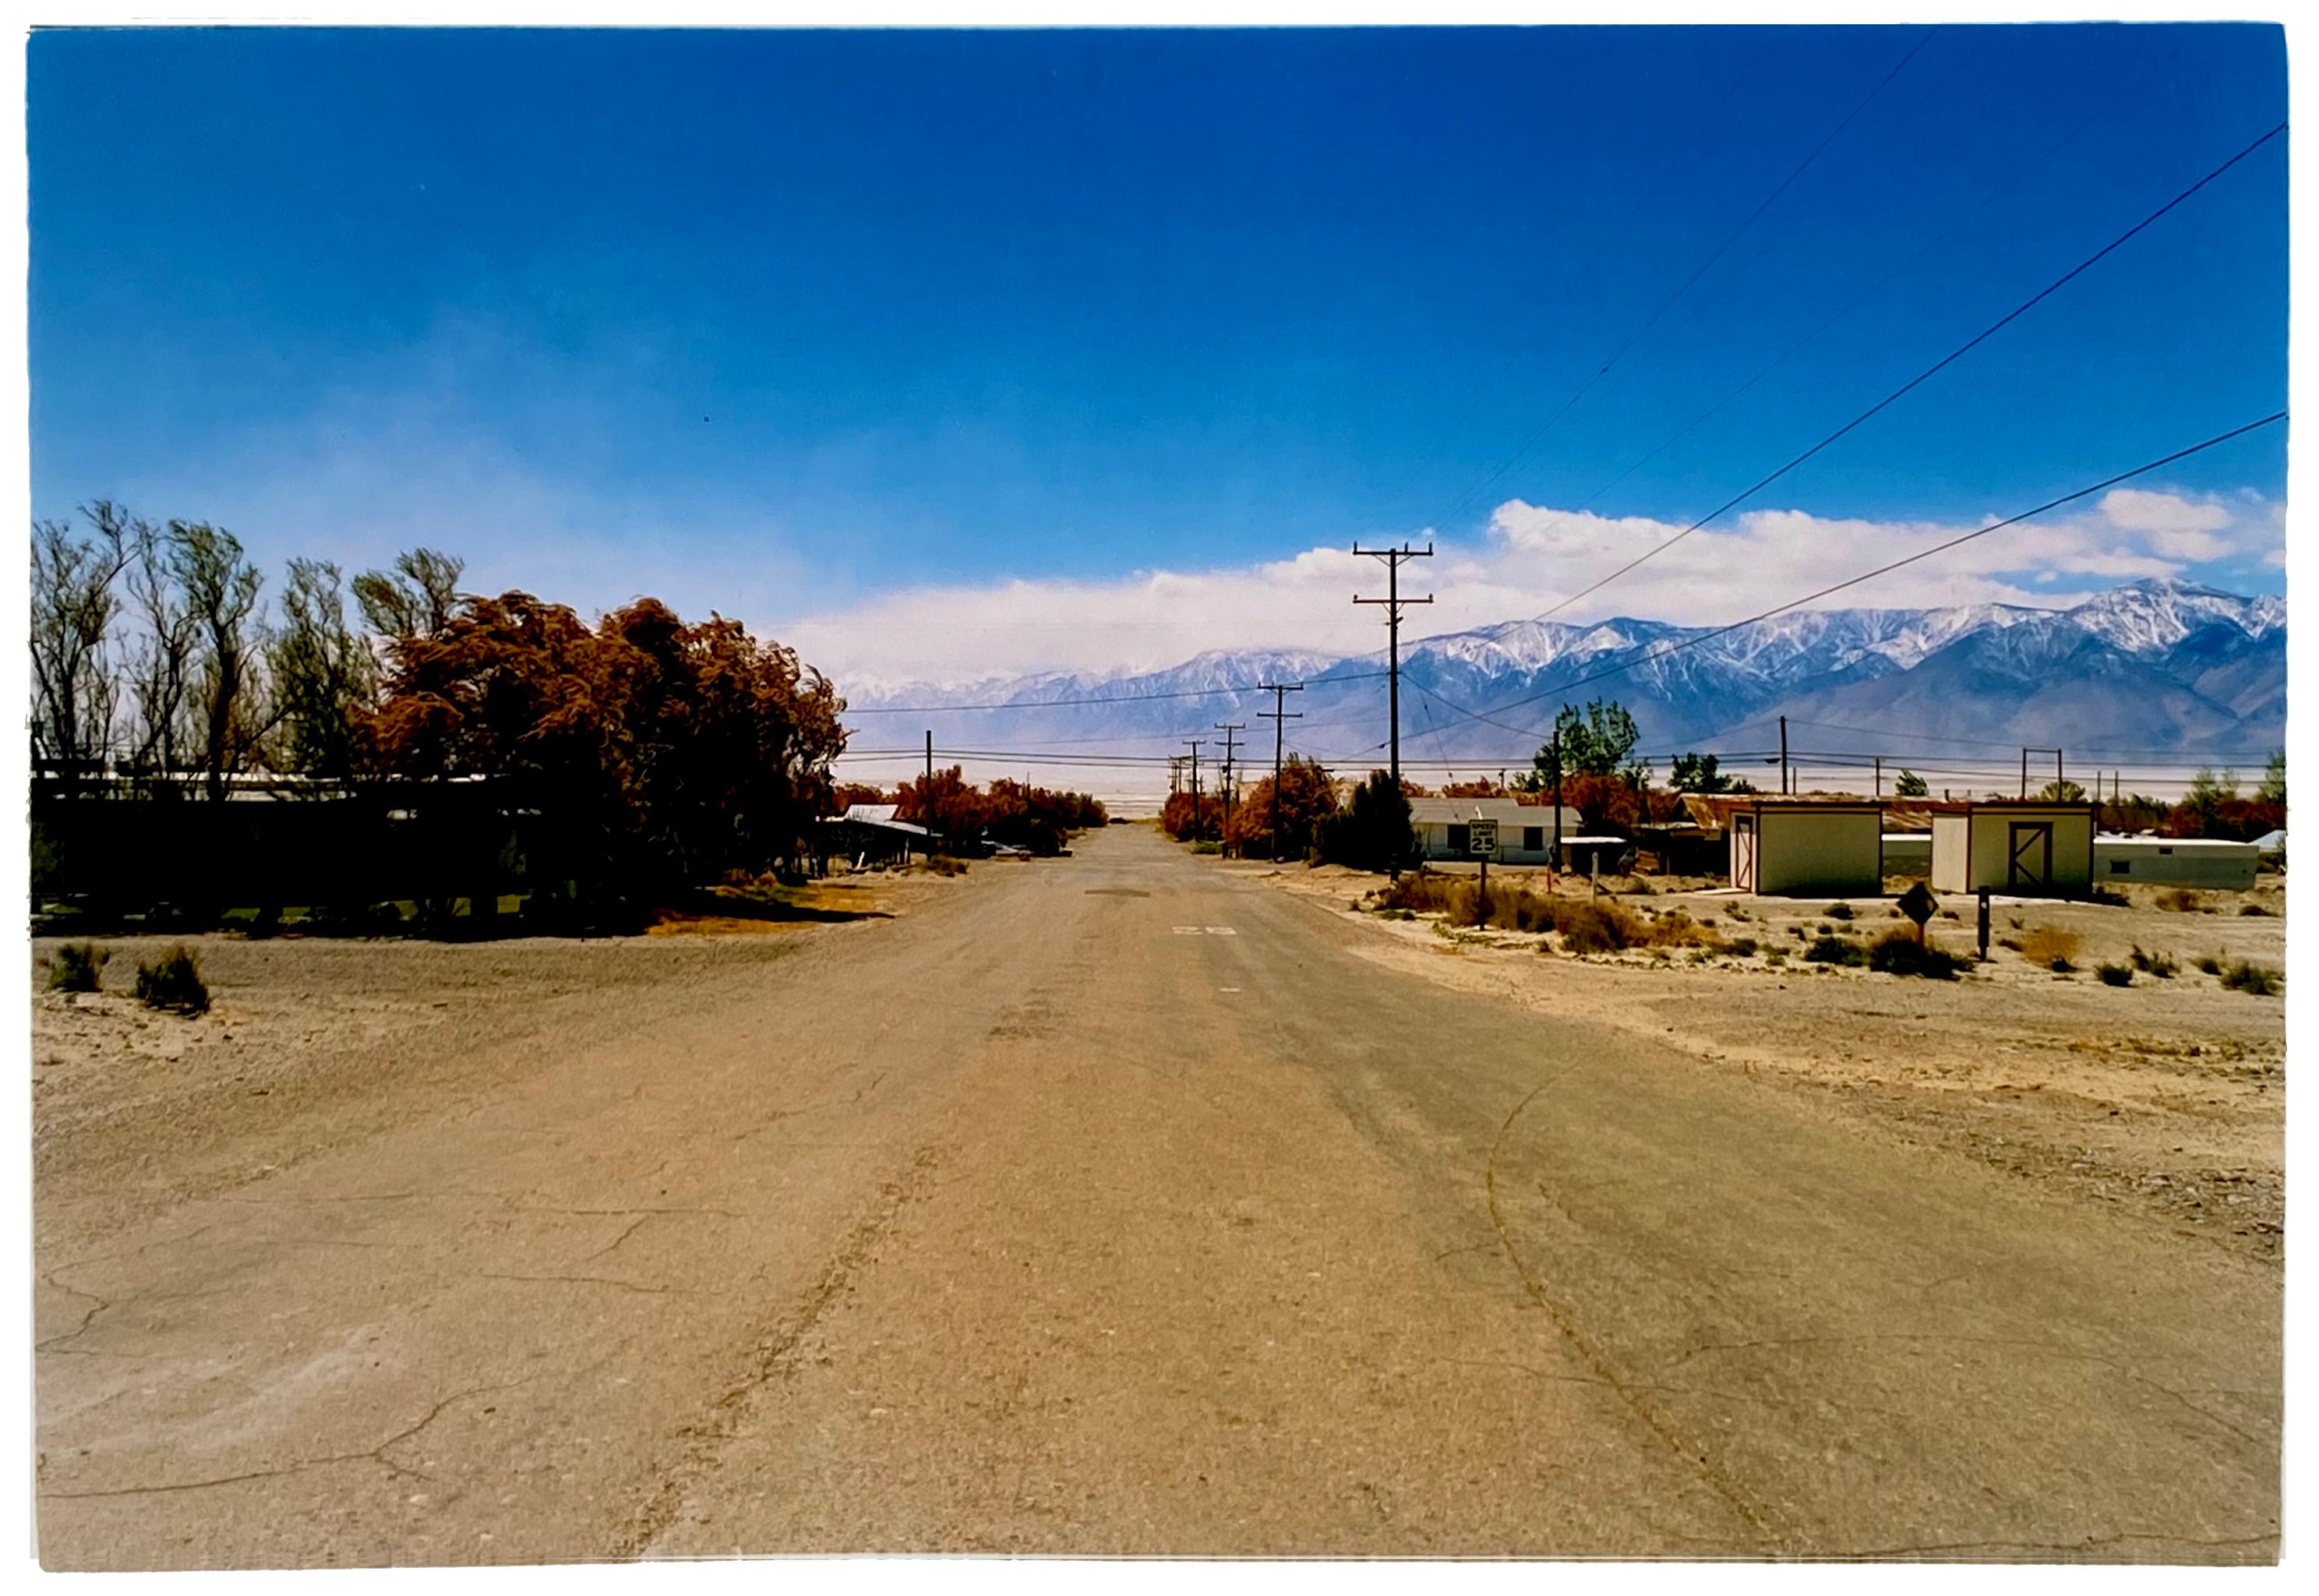 Richard Heeps Landscape Photograph - Malone Street, Keeler, California - American Landscape Color Photography